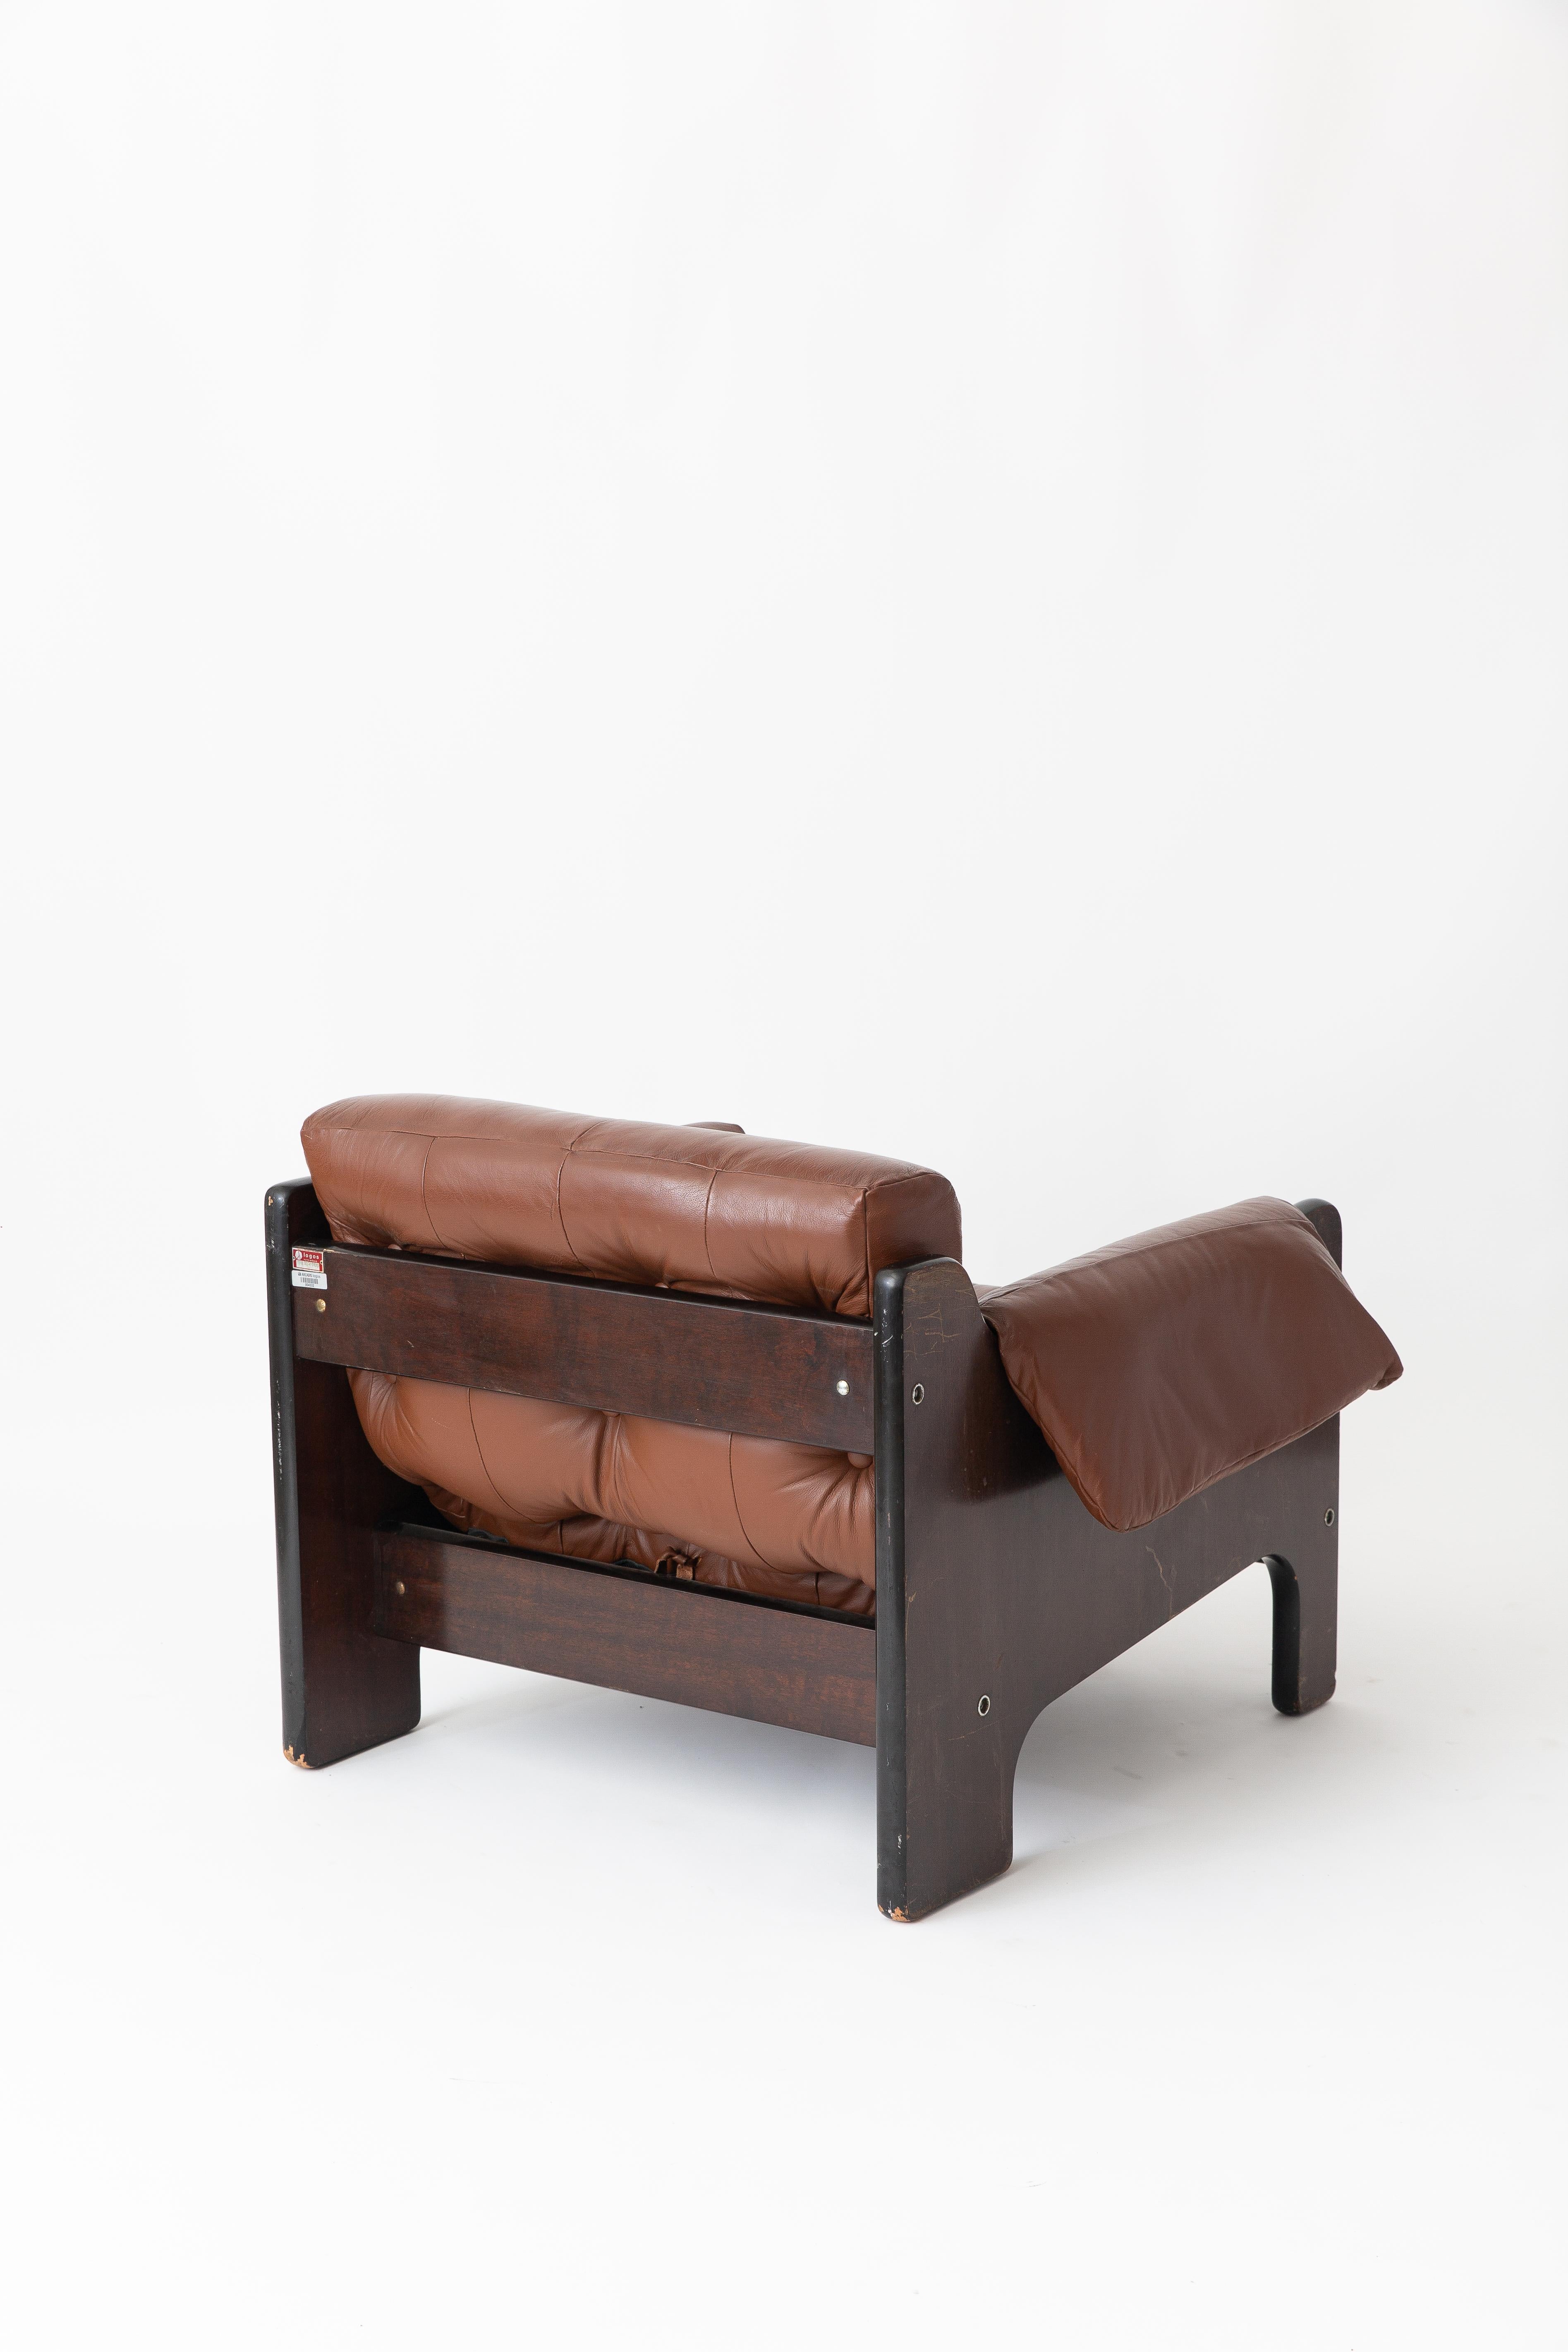 Geraldo De Barros leather armchairs In Good Condition For Sale In Washington, DC